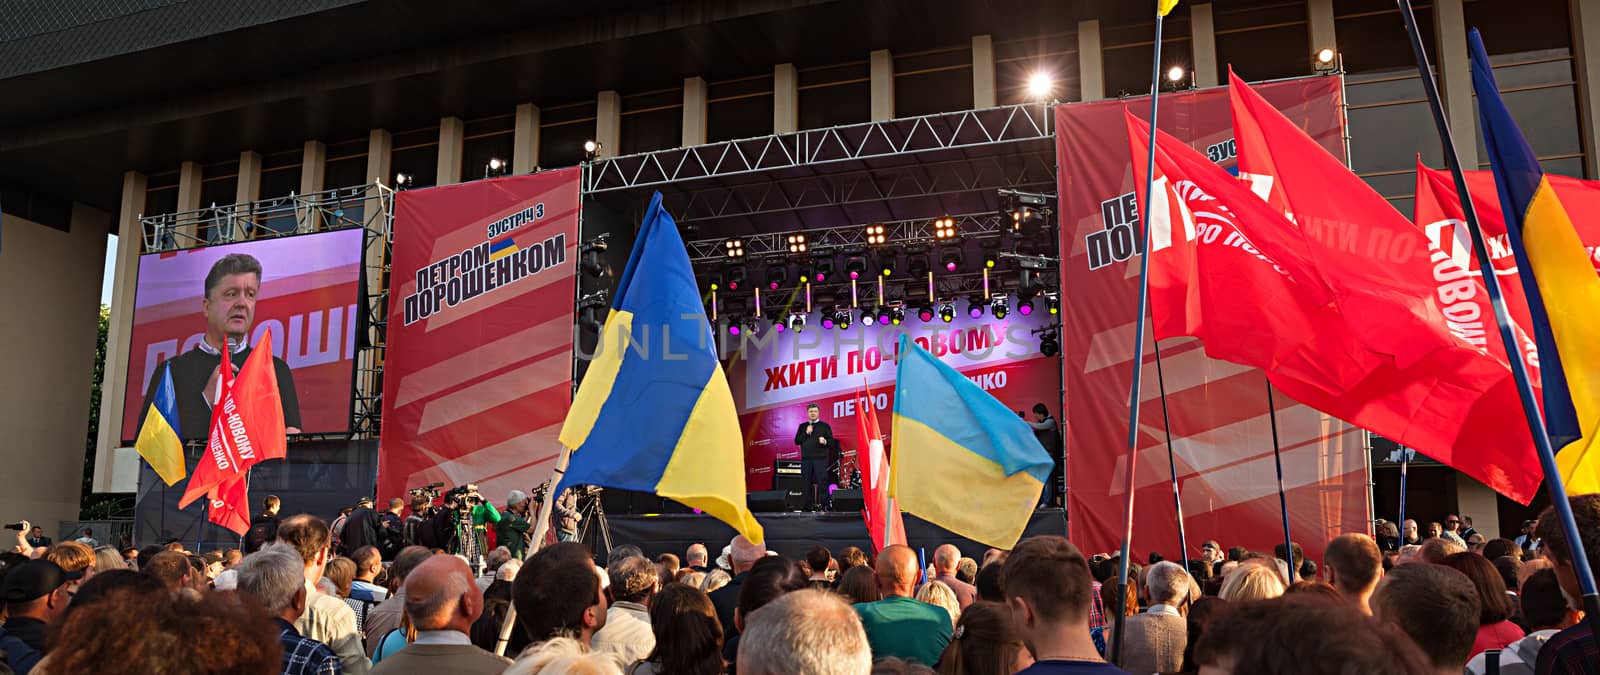 UZHGOROD, UKRAINE - MAY 1, 2014: Most rating Ukrainian presidential candidate Petro Poroshenko speaks at election meeting in Uzhgorod. On the poster: Live in new ways. Petro Poroshenko